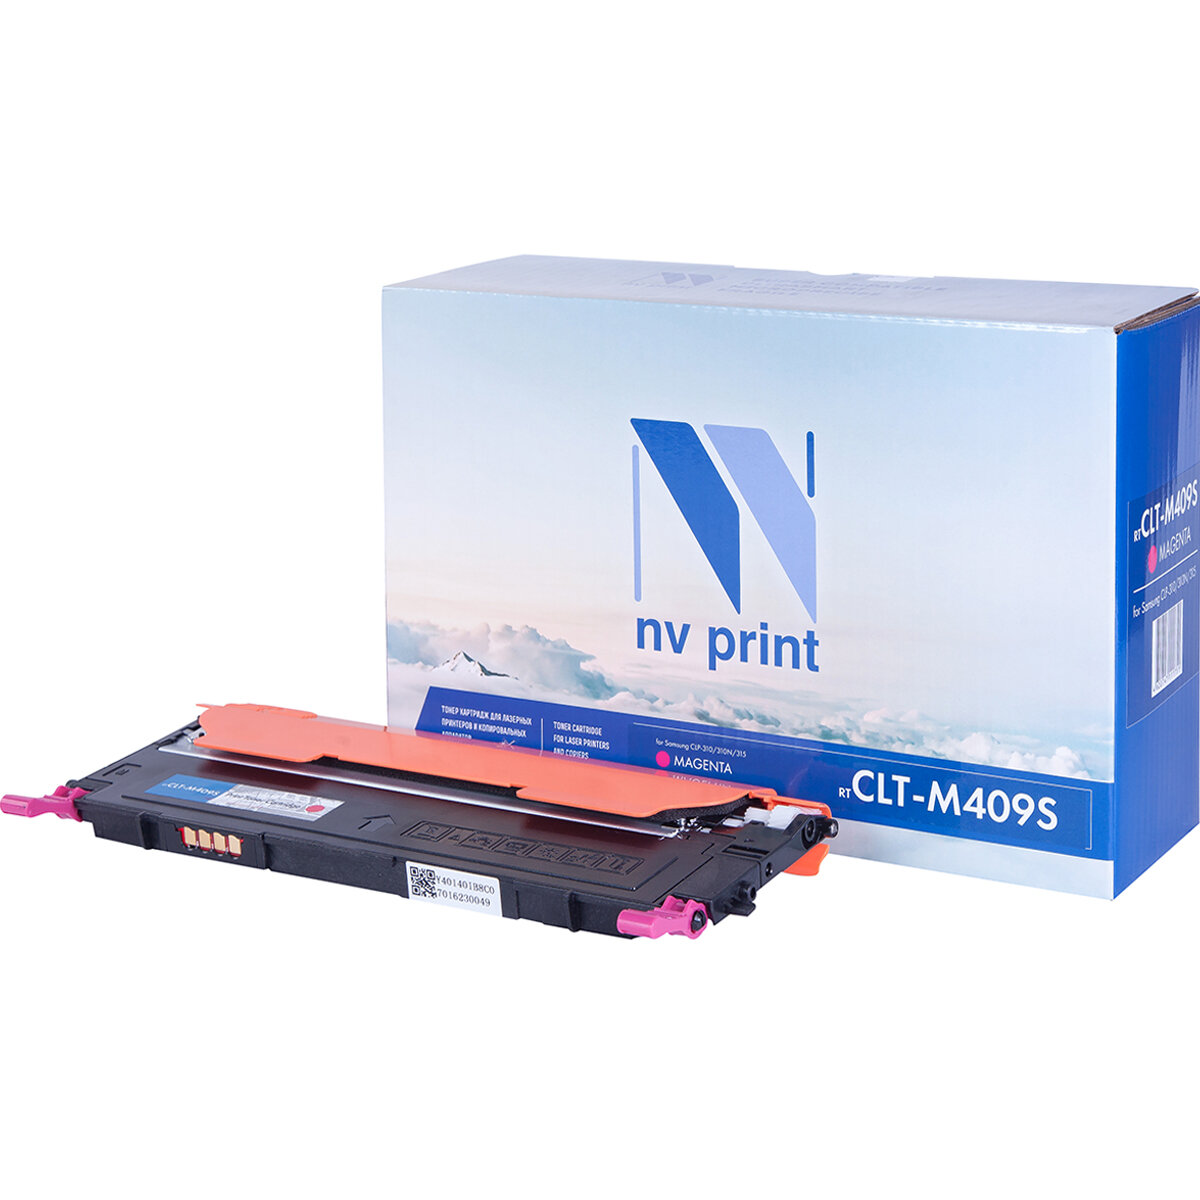 Картридж NV Print CLT-M409S Magenta для Samsung CLP300/310 (1000k)